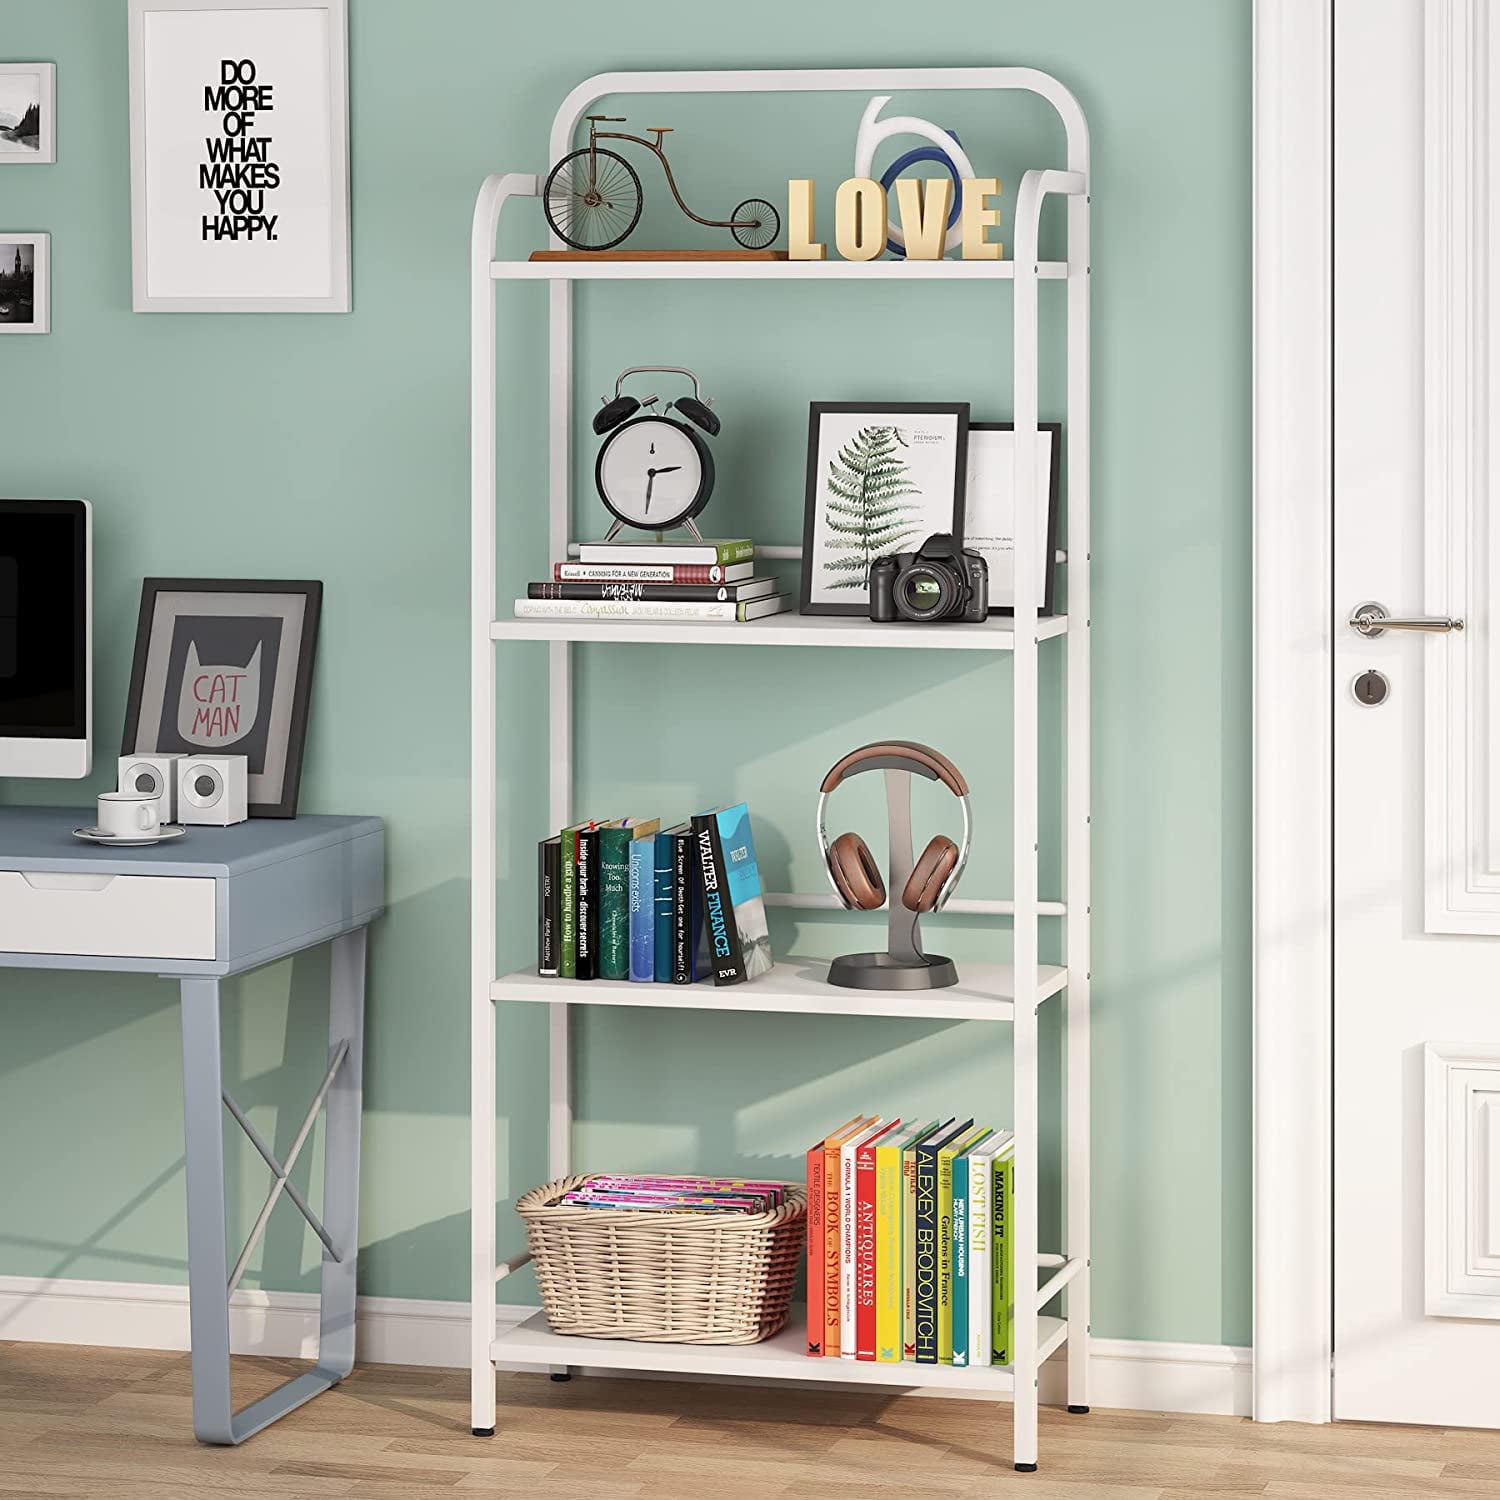 Details about   Blue 3 Shelf Bookcase Wooden Open Bookshelf Tier Storage Display Cabinet Decor 